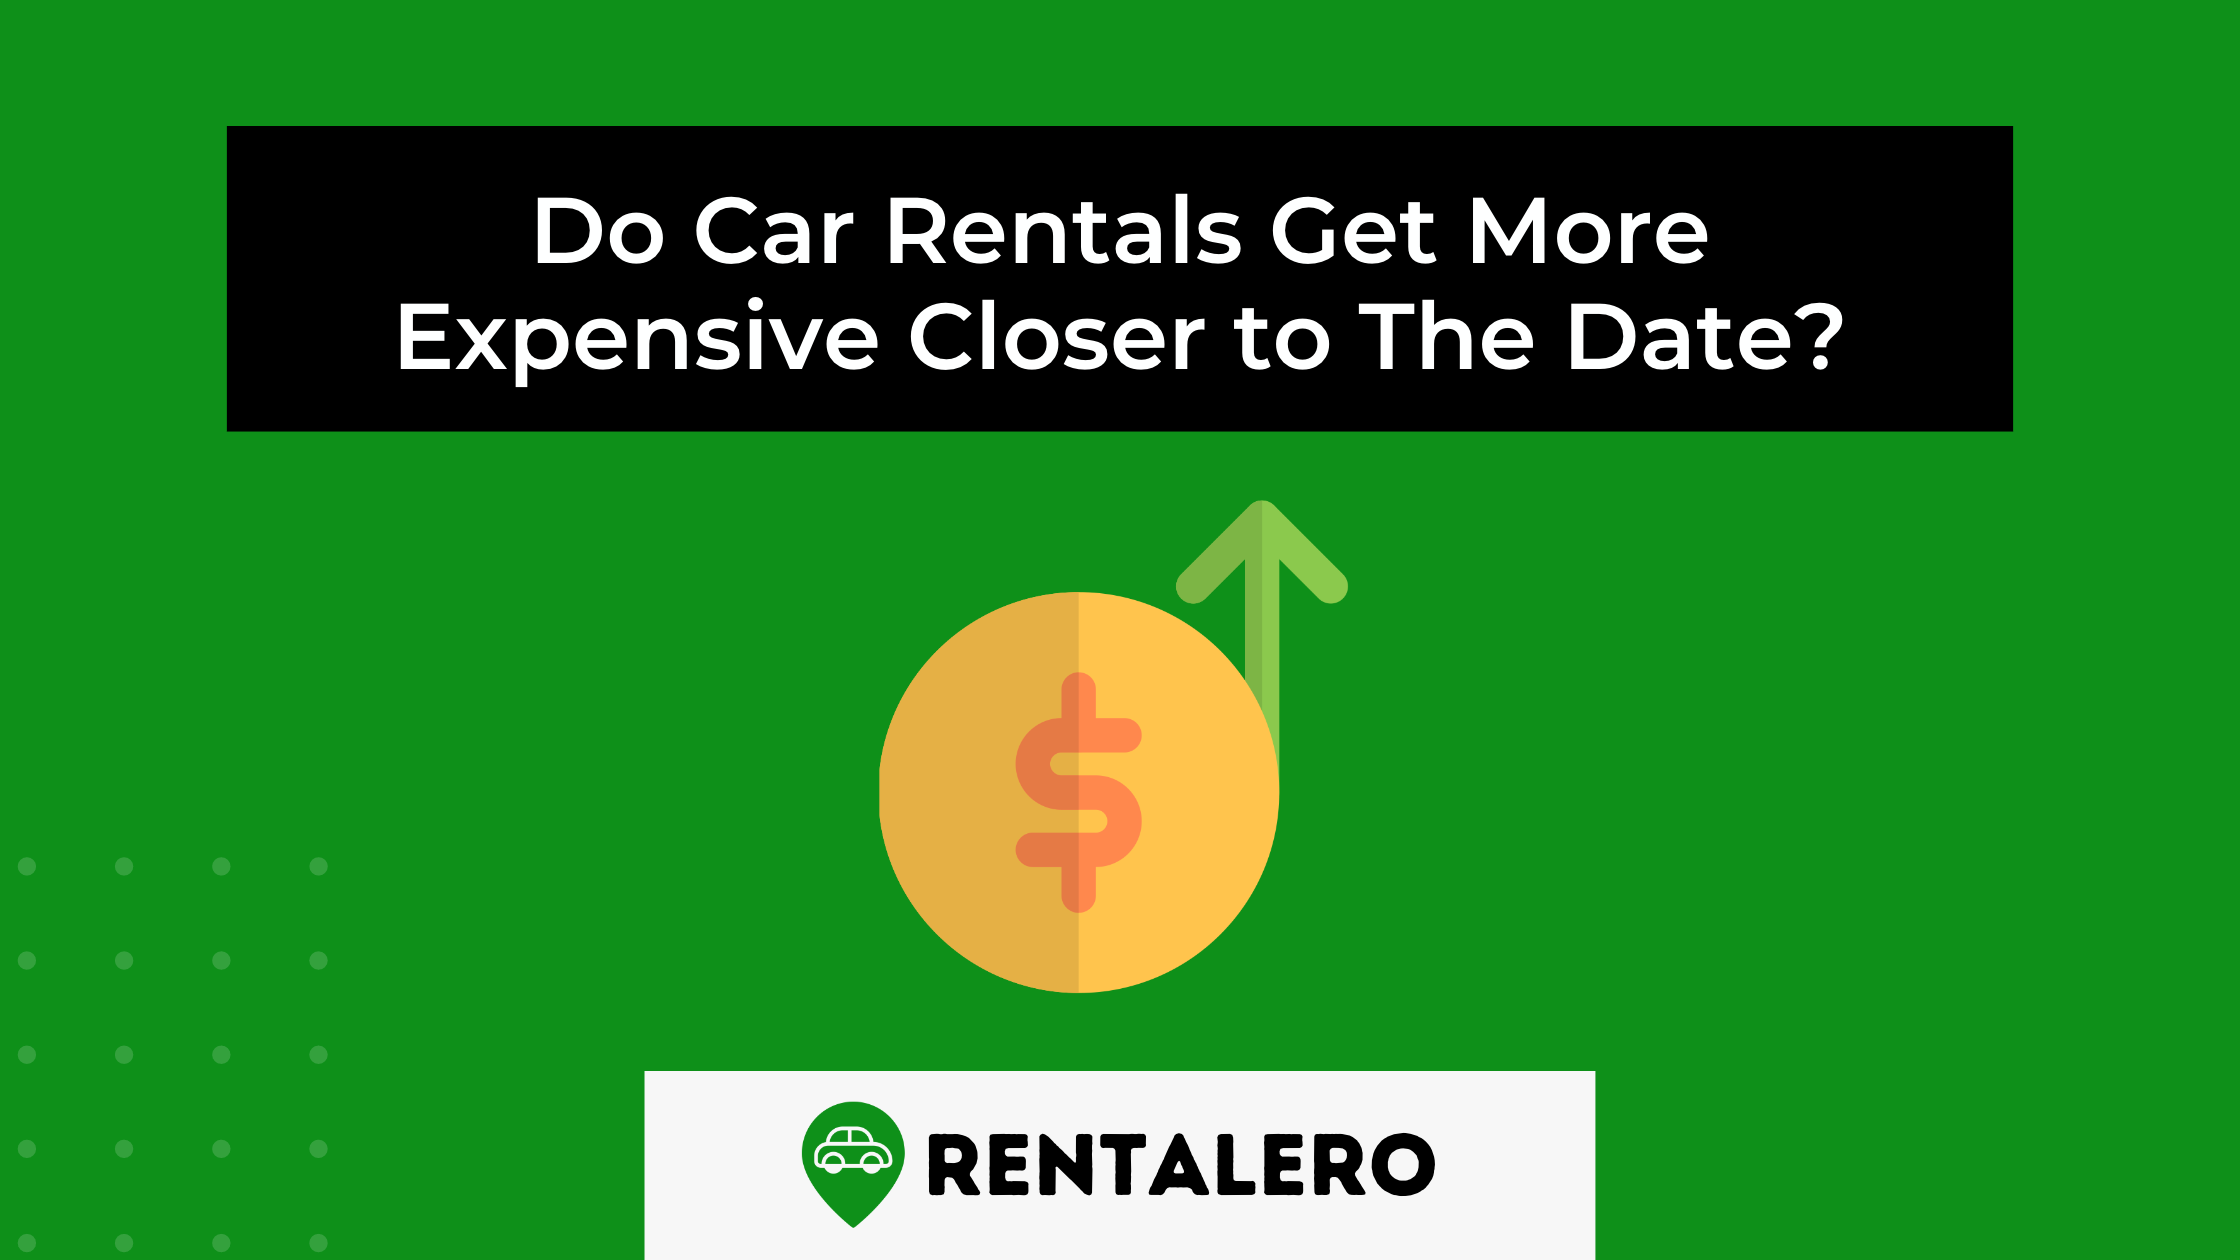 Do Car Rentals Get More Expensive Closer to The Date?